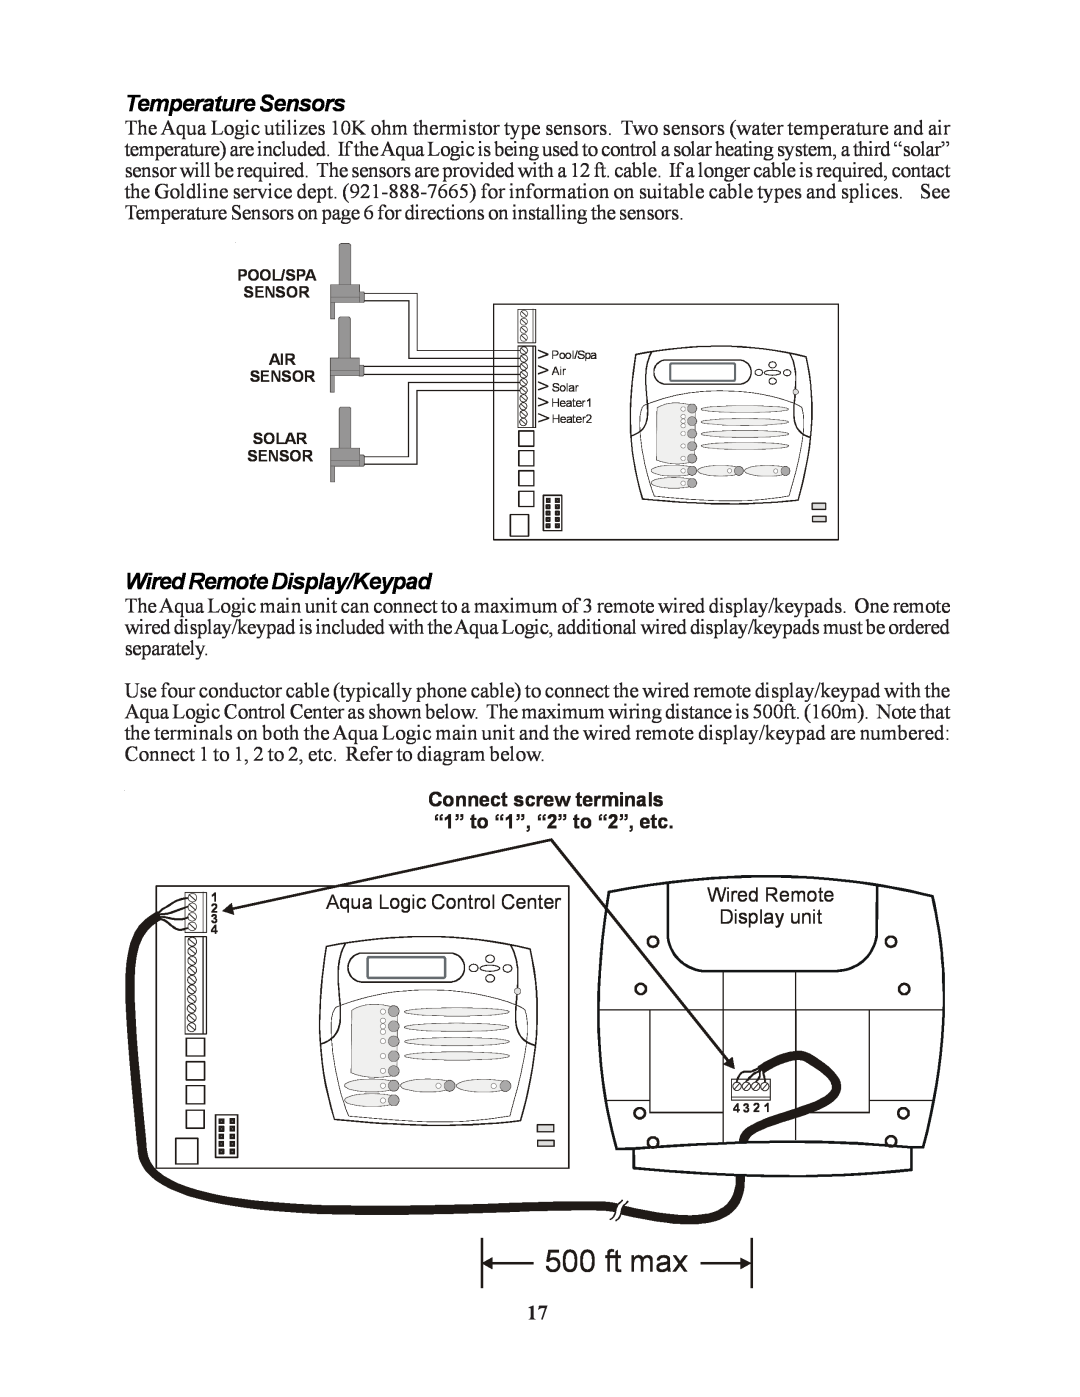 Raypak PS-4 PS-8 installation manual Temperature Sensors, Wired Remote Display/Keypad, ft max 